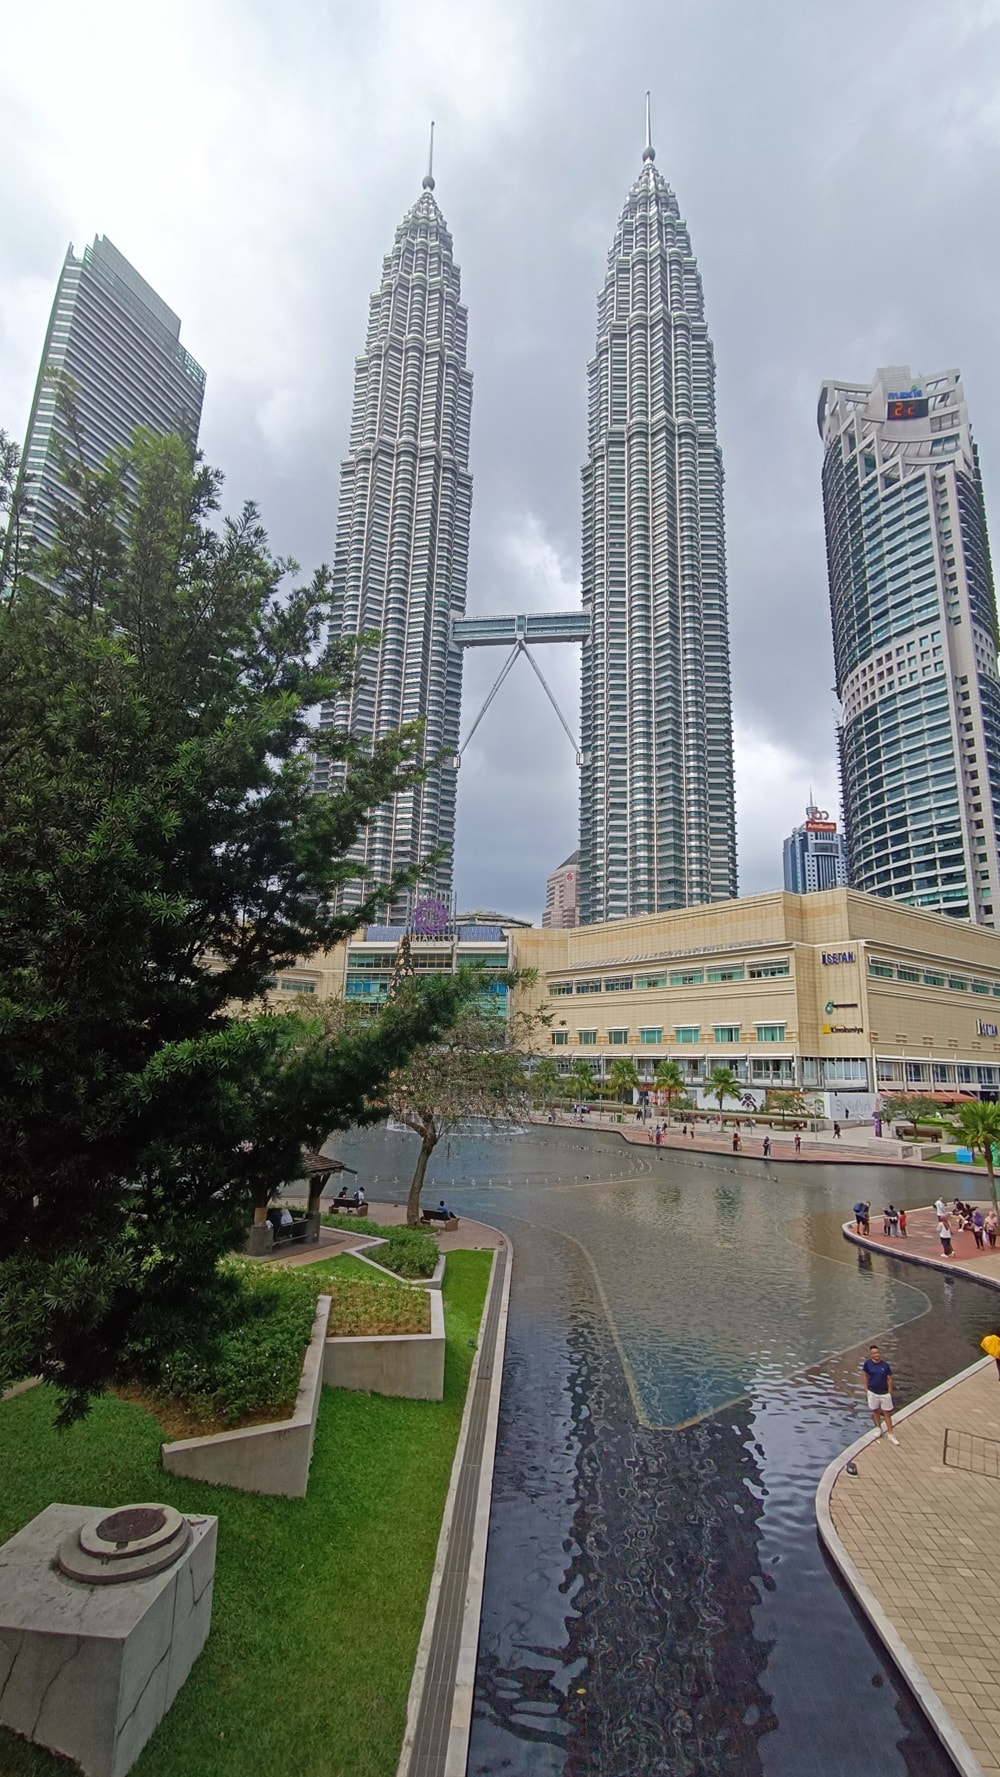 Petronas Twin Towers in Kuala Lumpur. Photo credits Thierry Hanan Scheers.